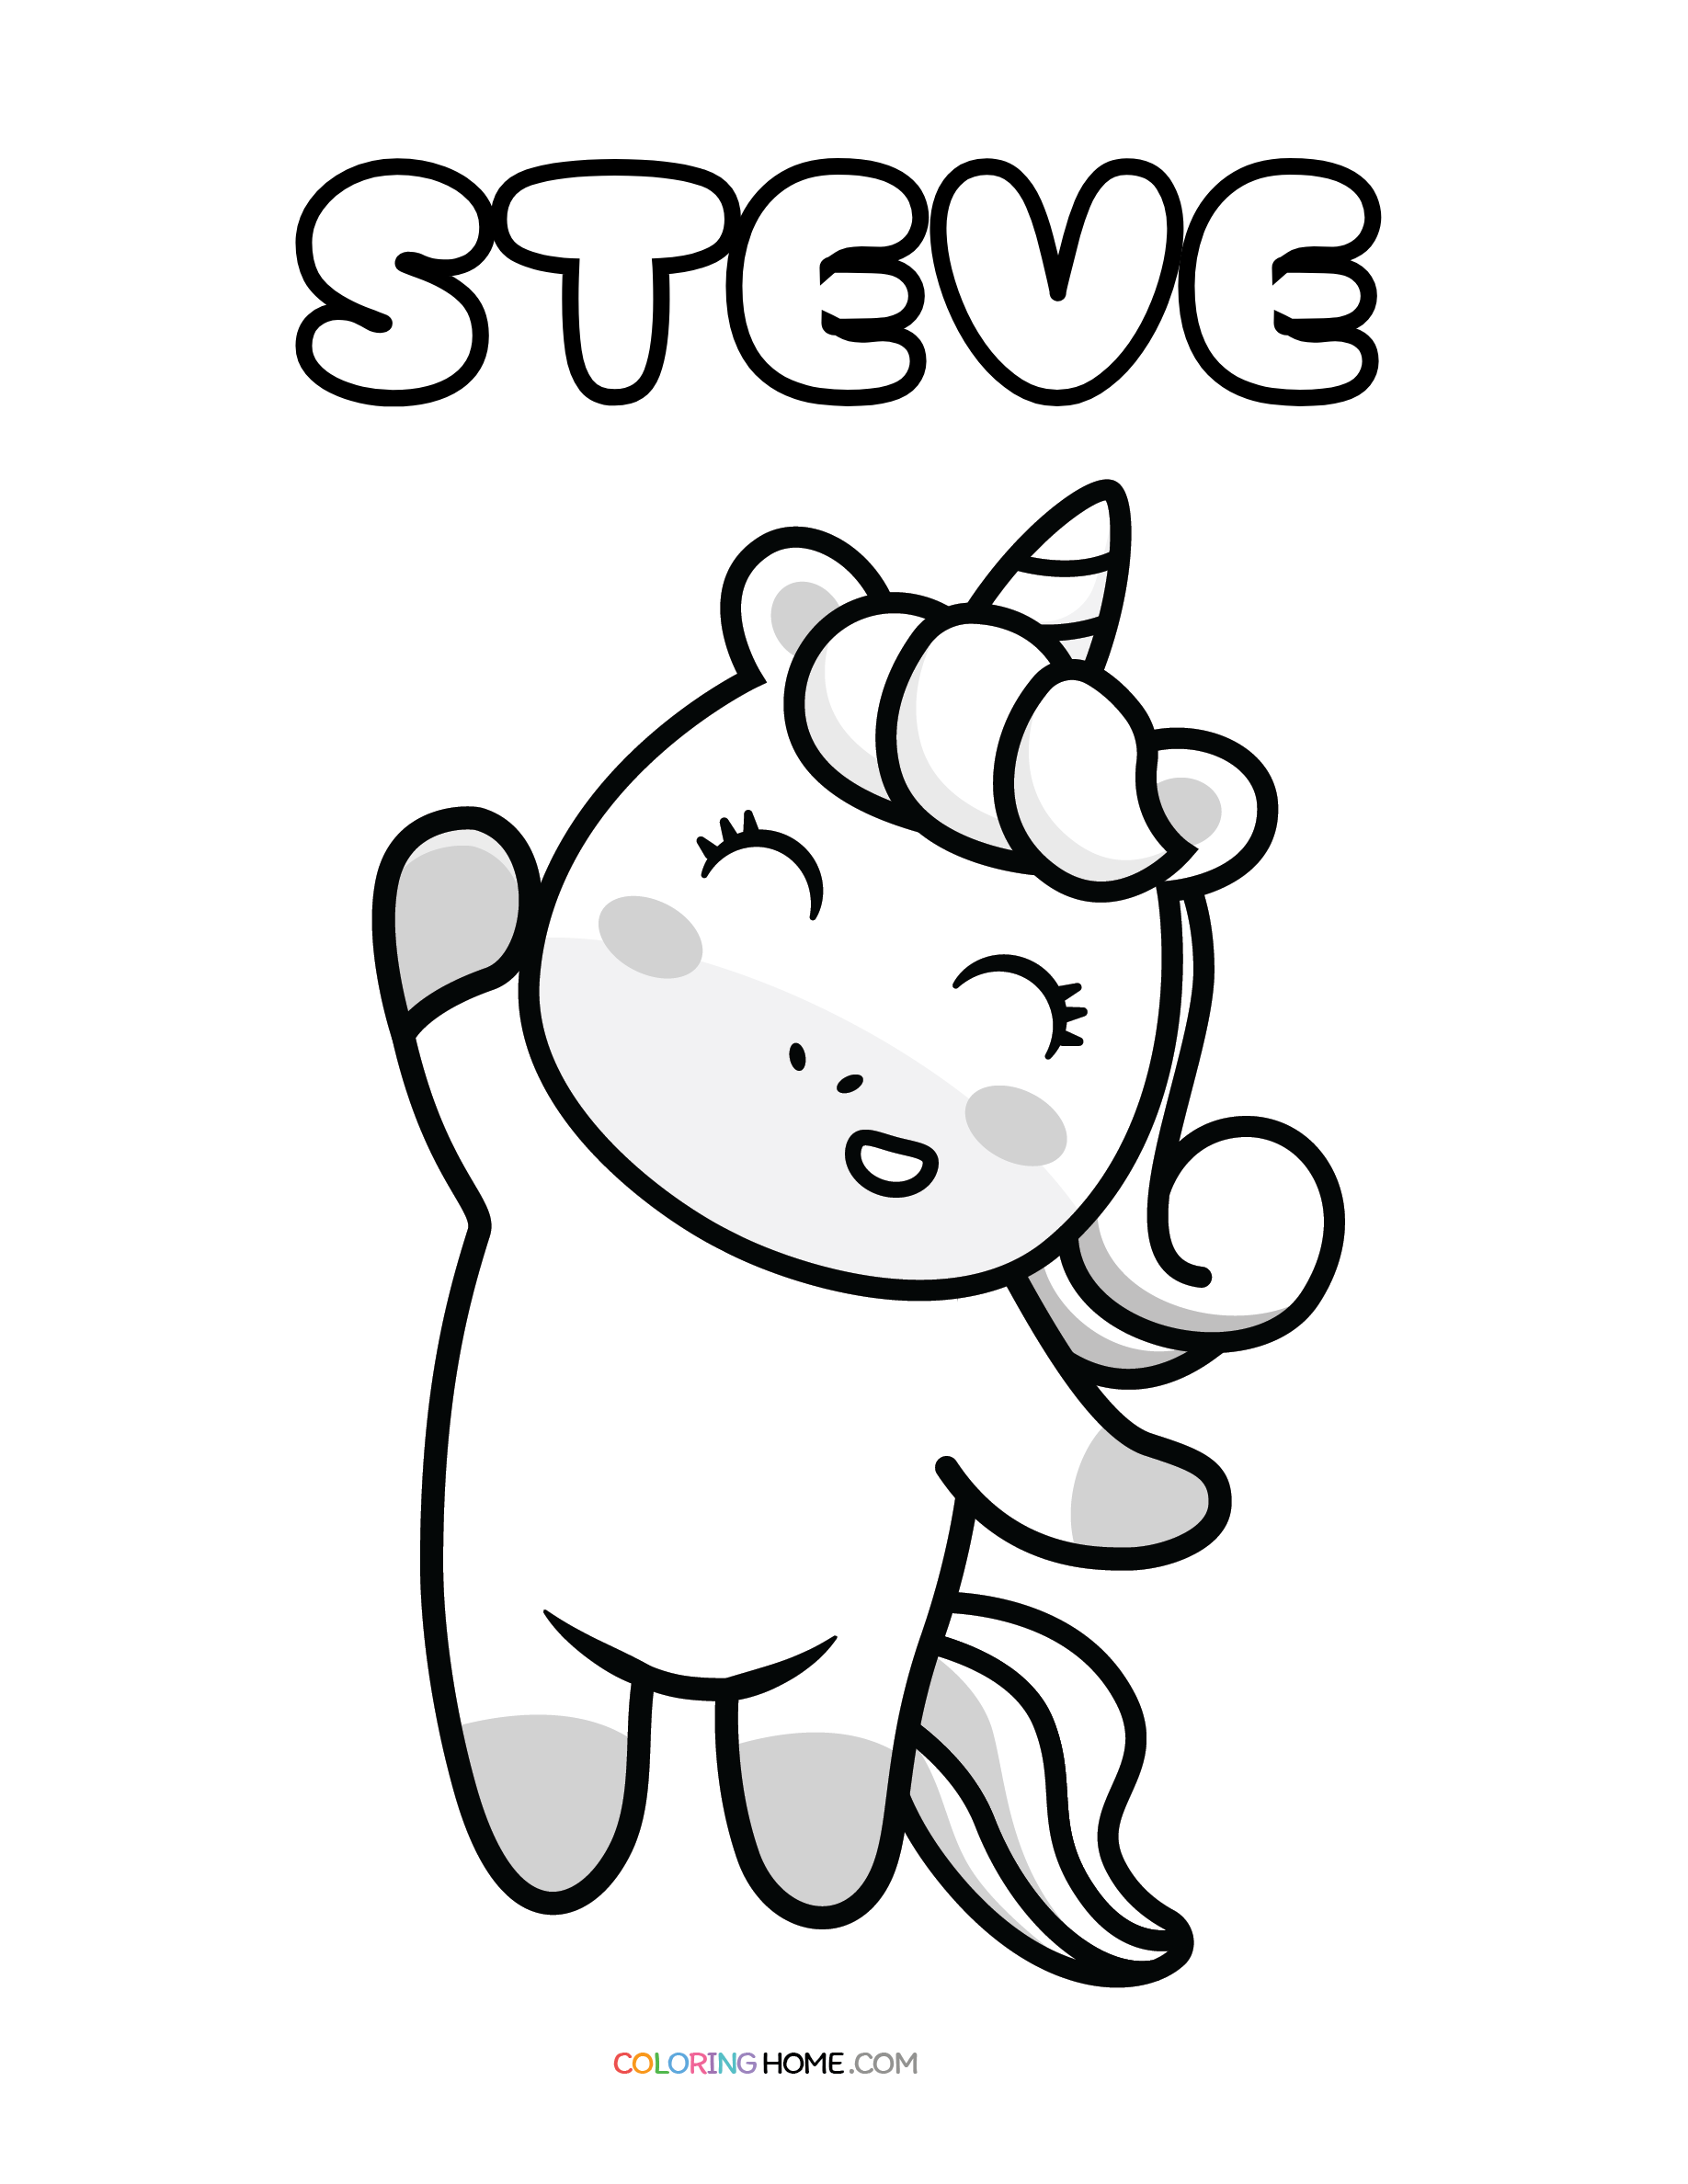 Steve unicorn coloring page